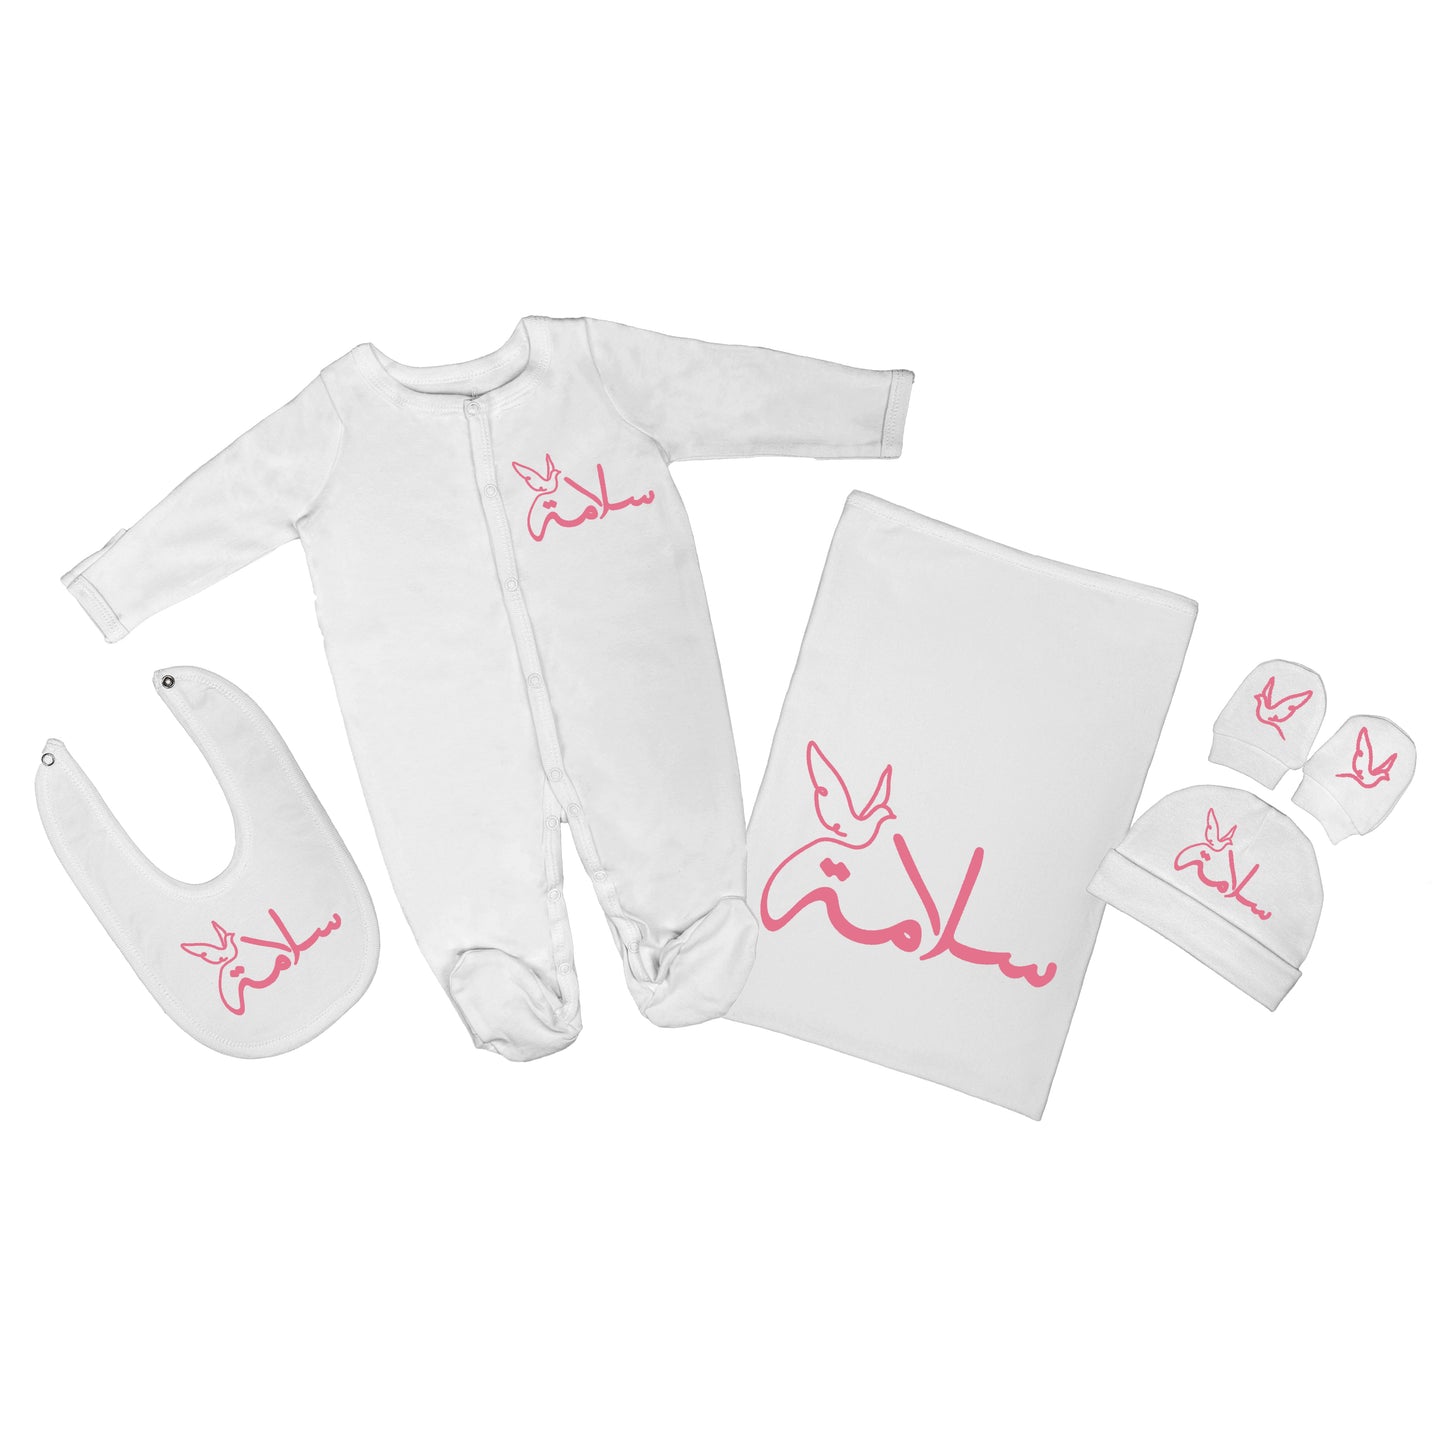 Personalized Baby Clothing Set (Blanket, Sleepsuit, Beanie, Bib, Mittens) - Dove